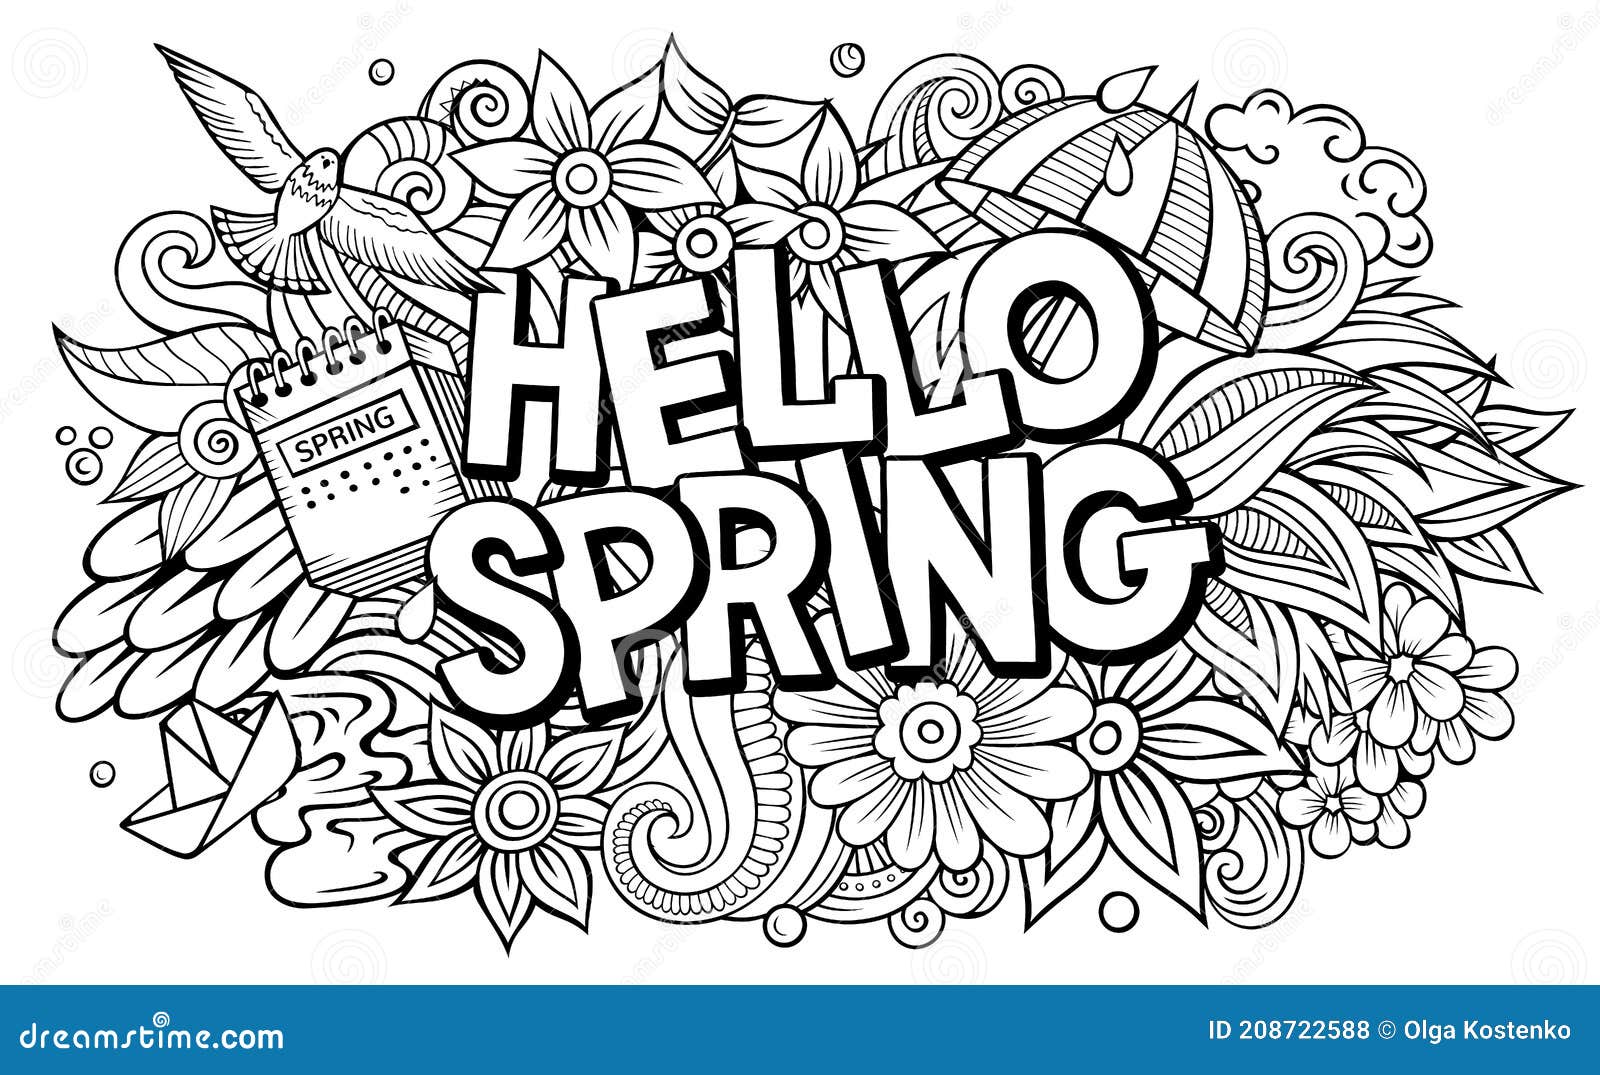 Hello Spring Hand Drawn Cartoon Doodles Illustration. Funny Seasonal ...